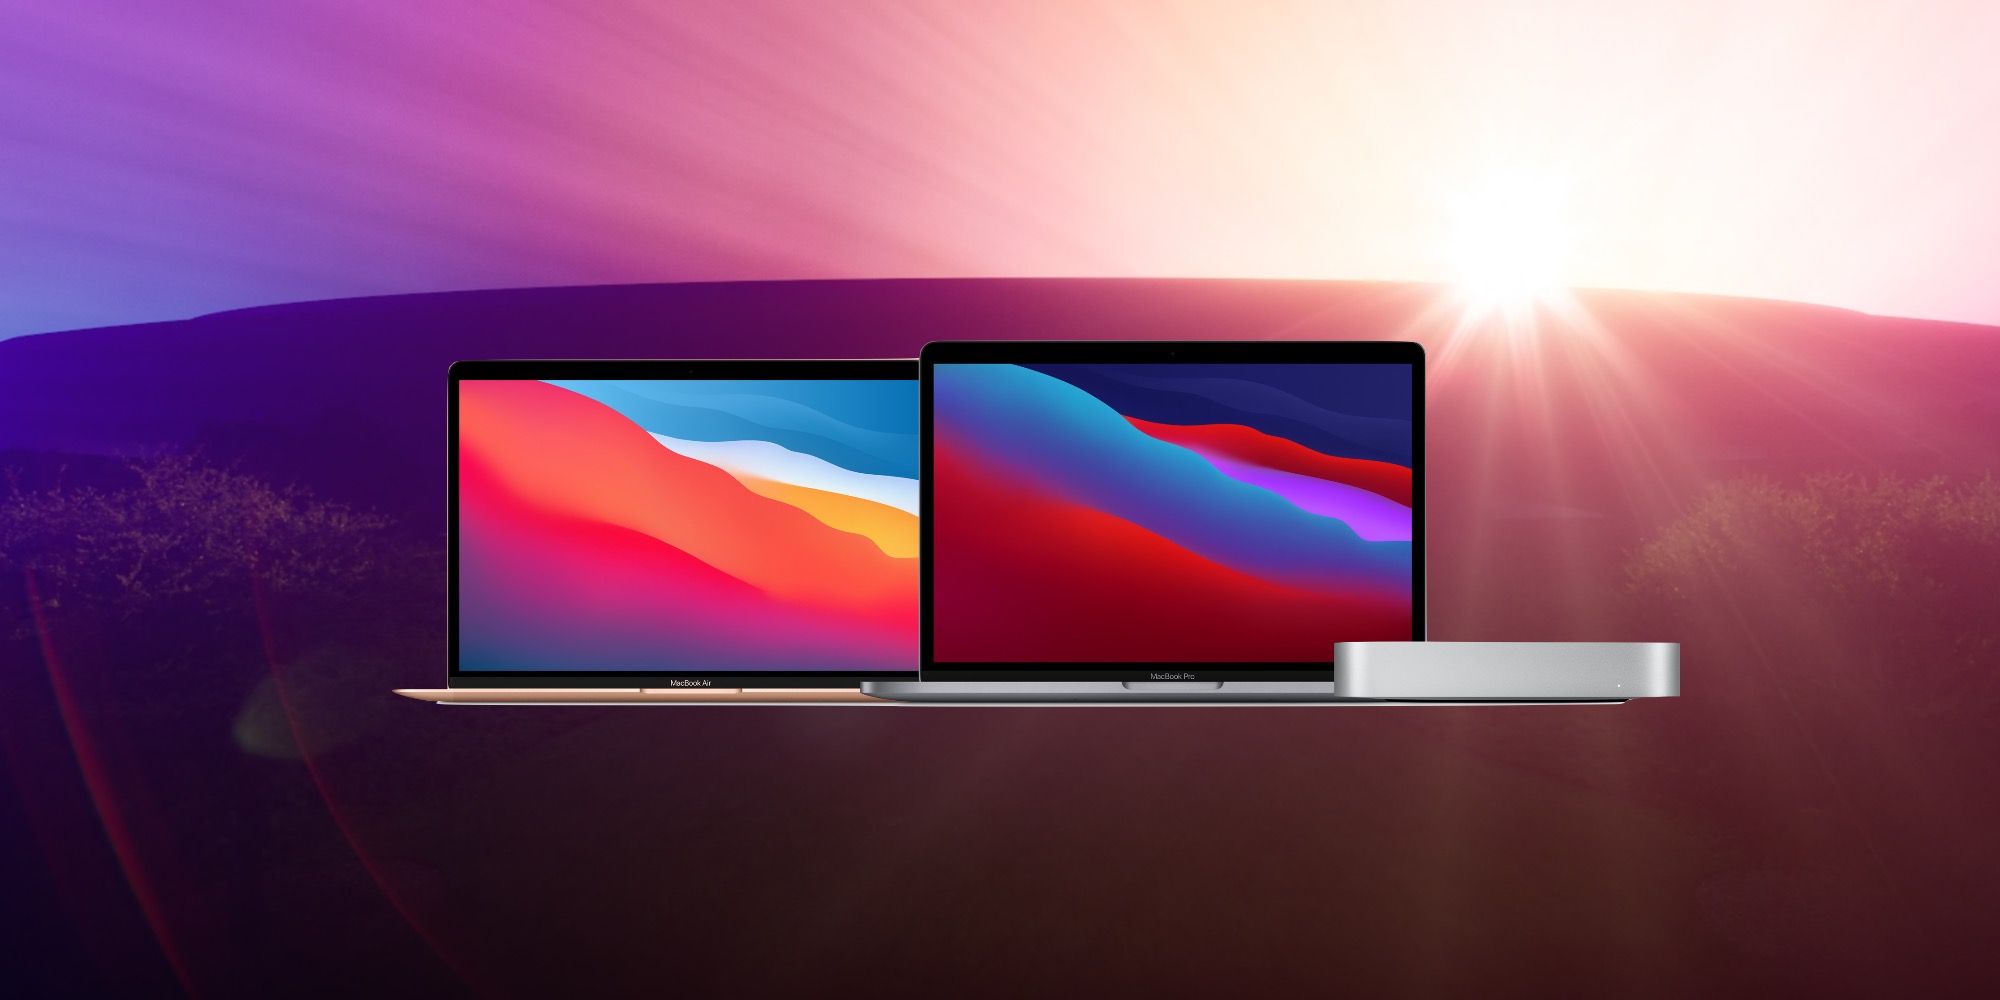 Mac mini, MacBook Air & MacBook Pro Are First Apple Silicon M1 Macs